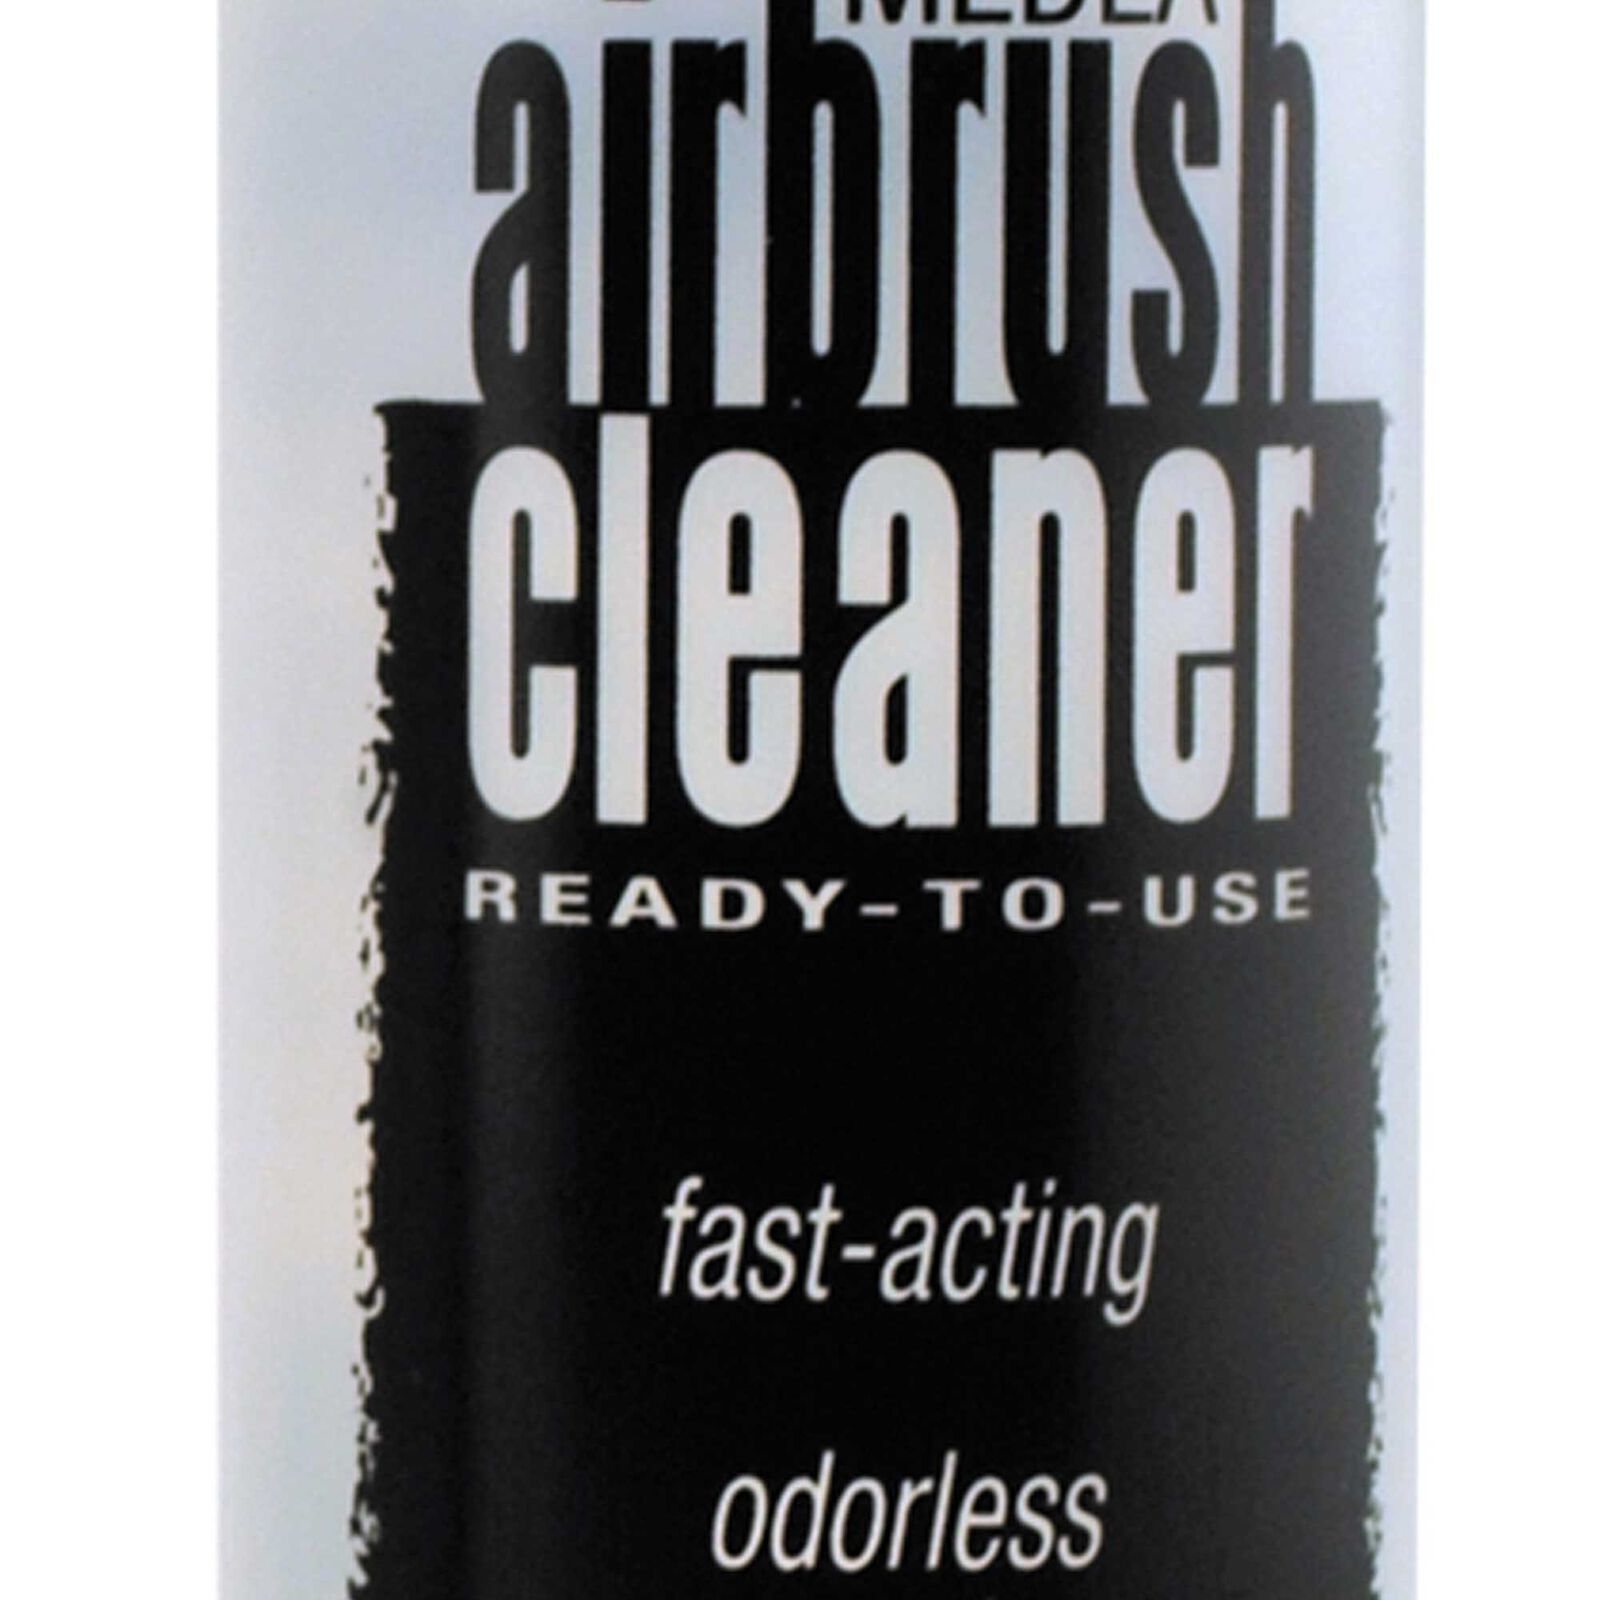 Airbrush Cleaner 16 oz. (448 ml)